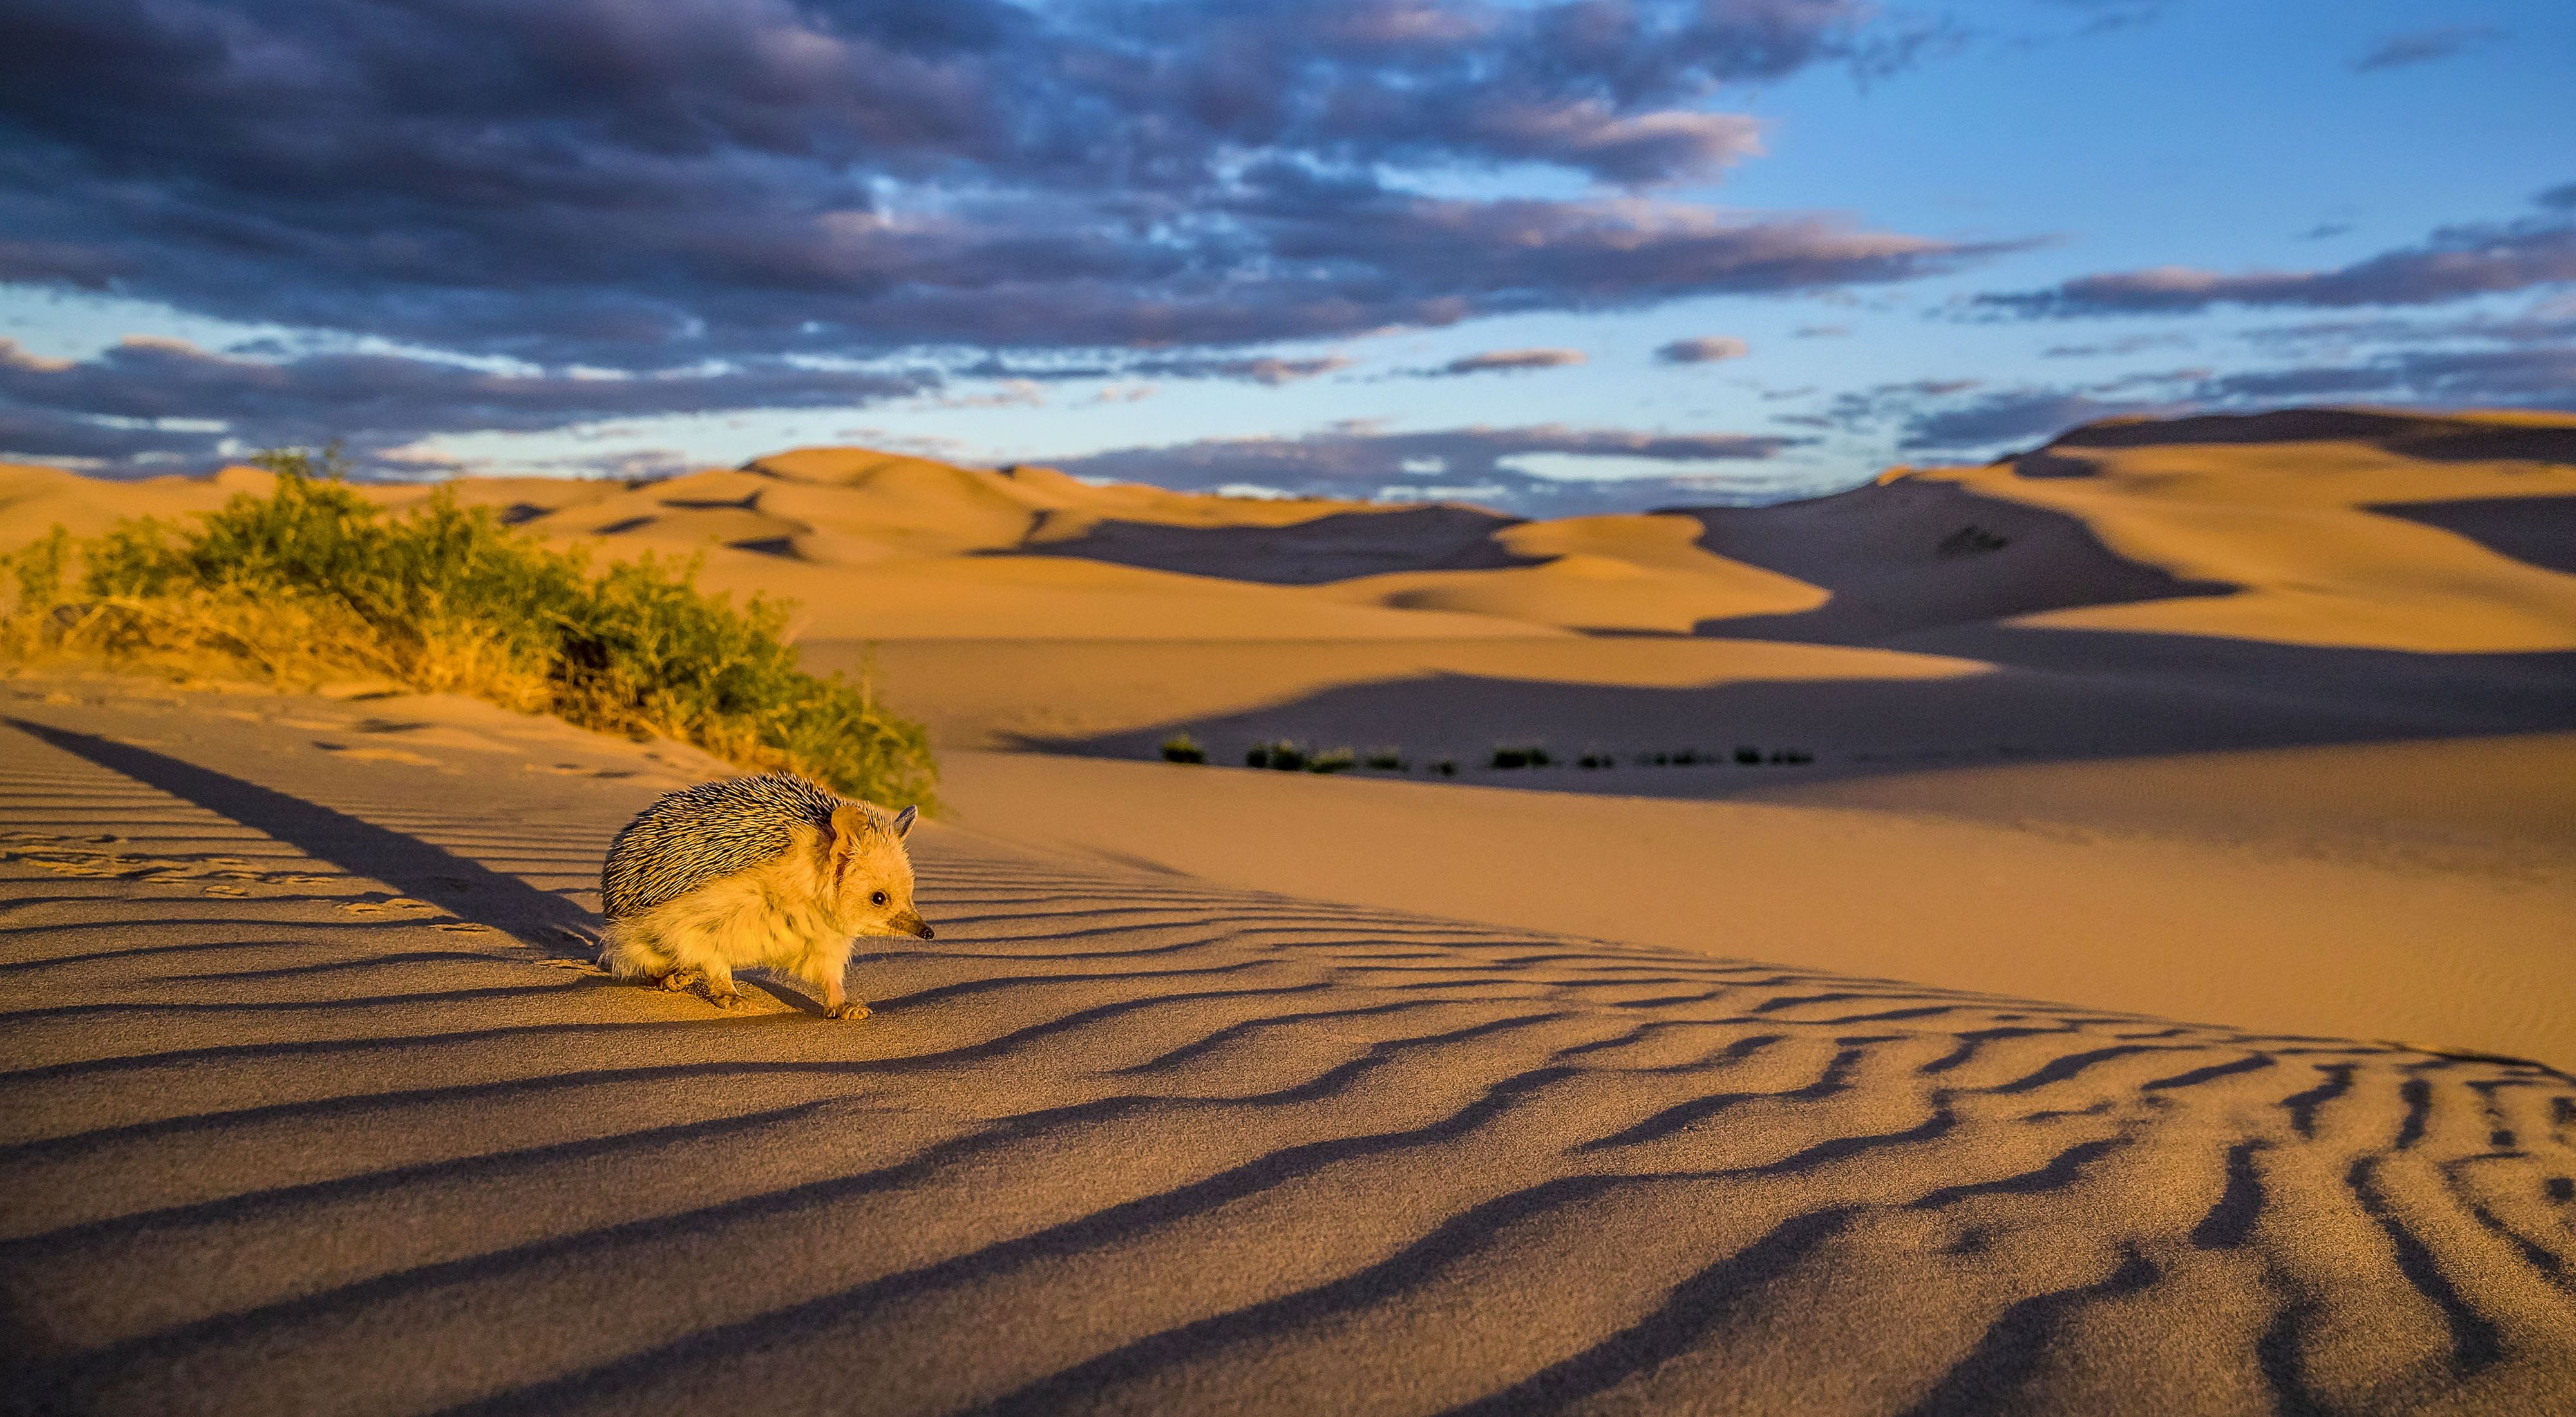 Hedgehog on a dune at sunset.